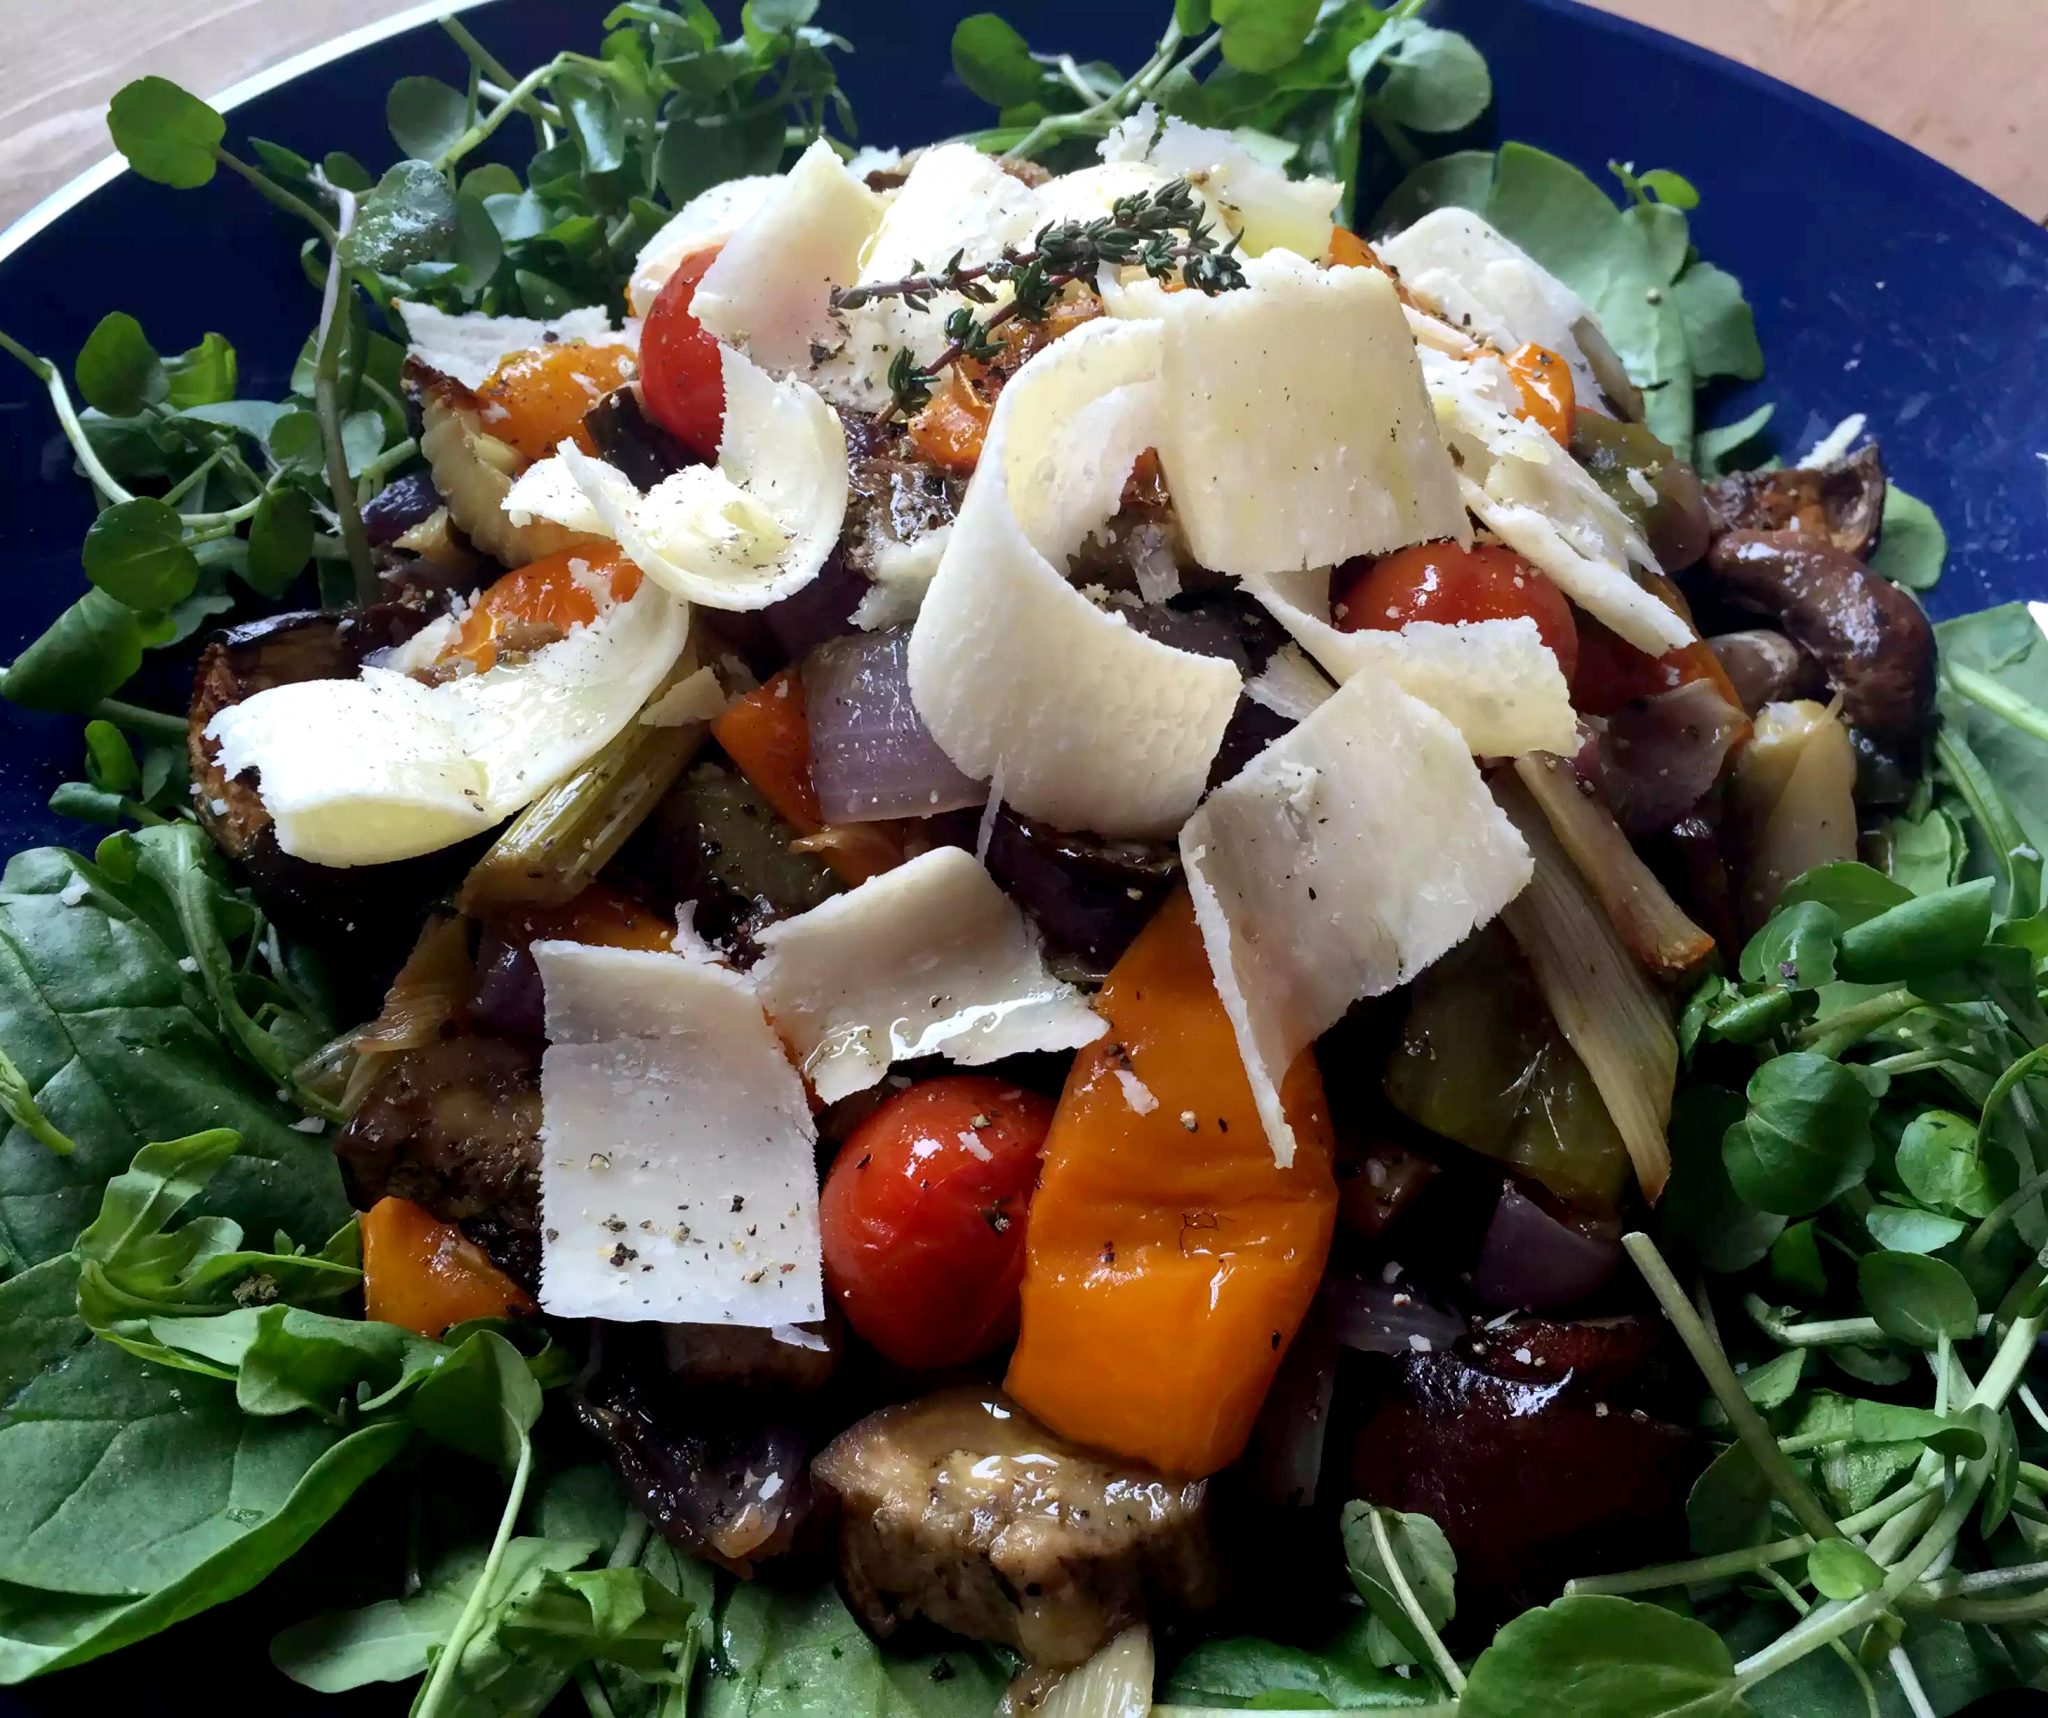 Thyme Roasted Vegetable Salad with Parmesan Shavings - SCD, Paleo, Grain-Free, Gluten-Free, Vegetarian, Sugar-Free